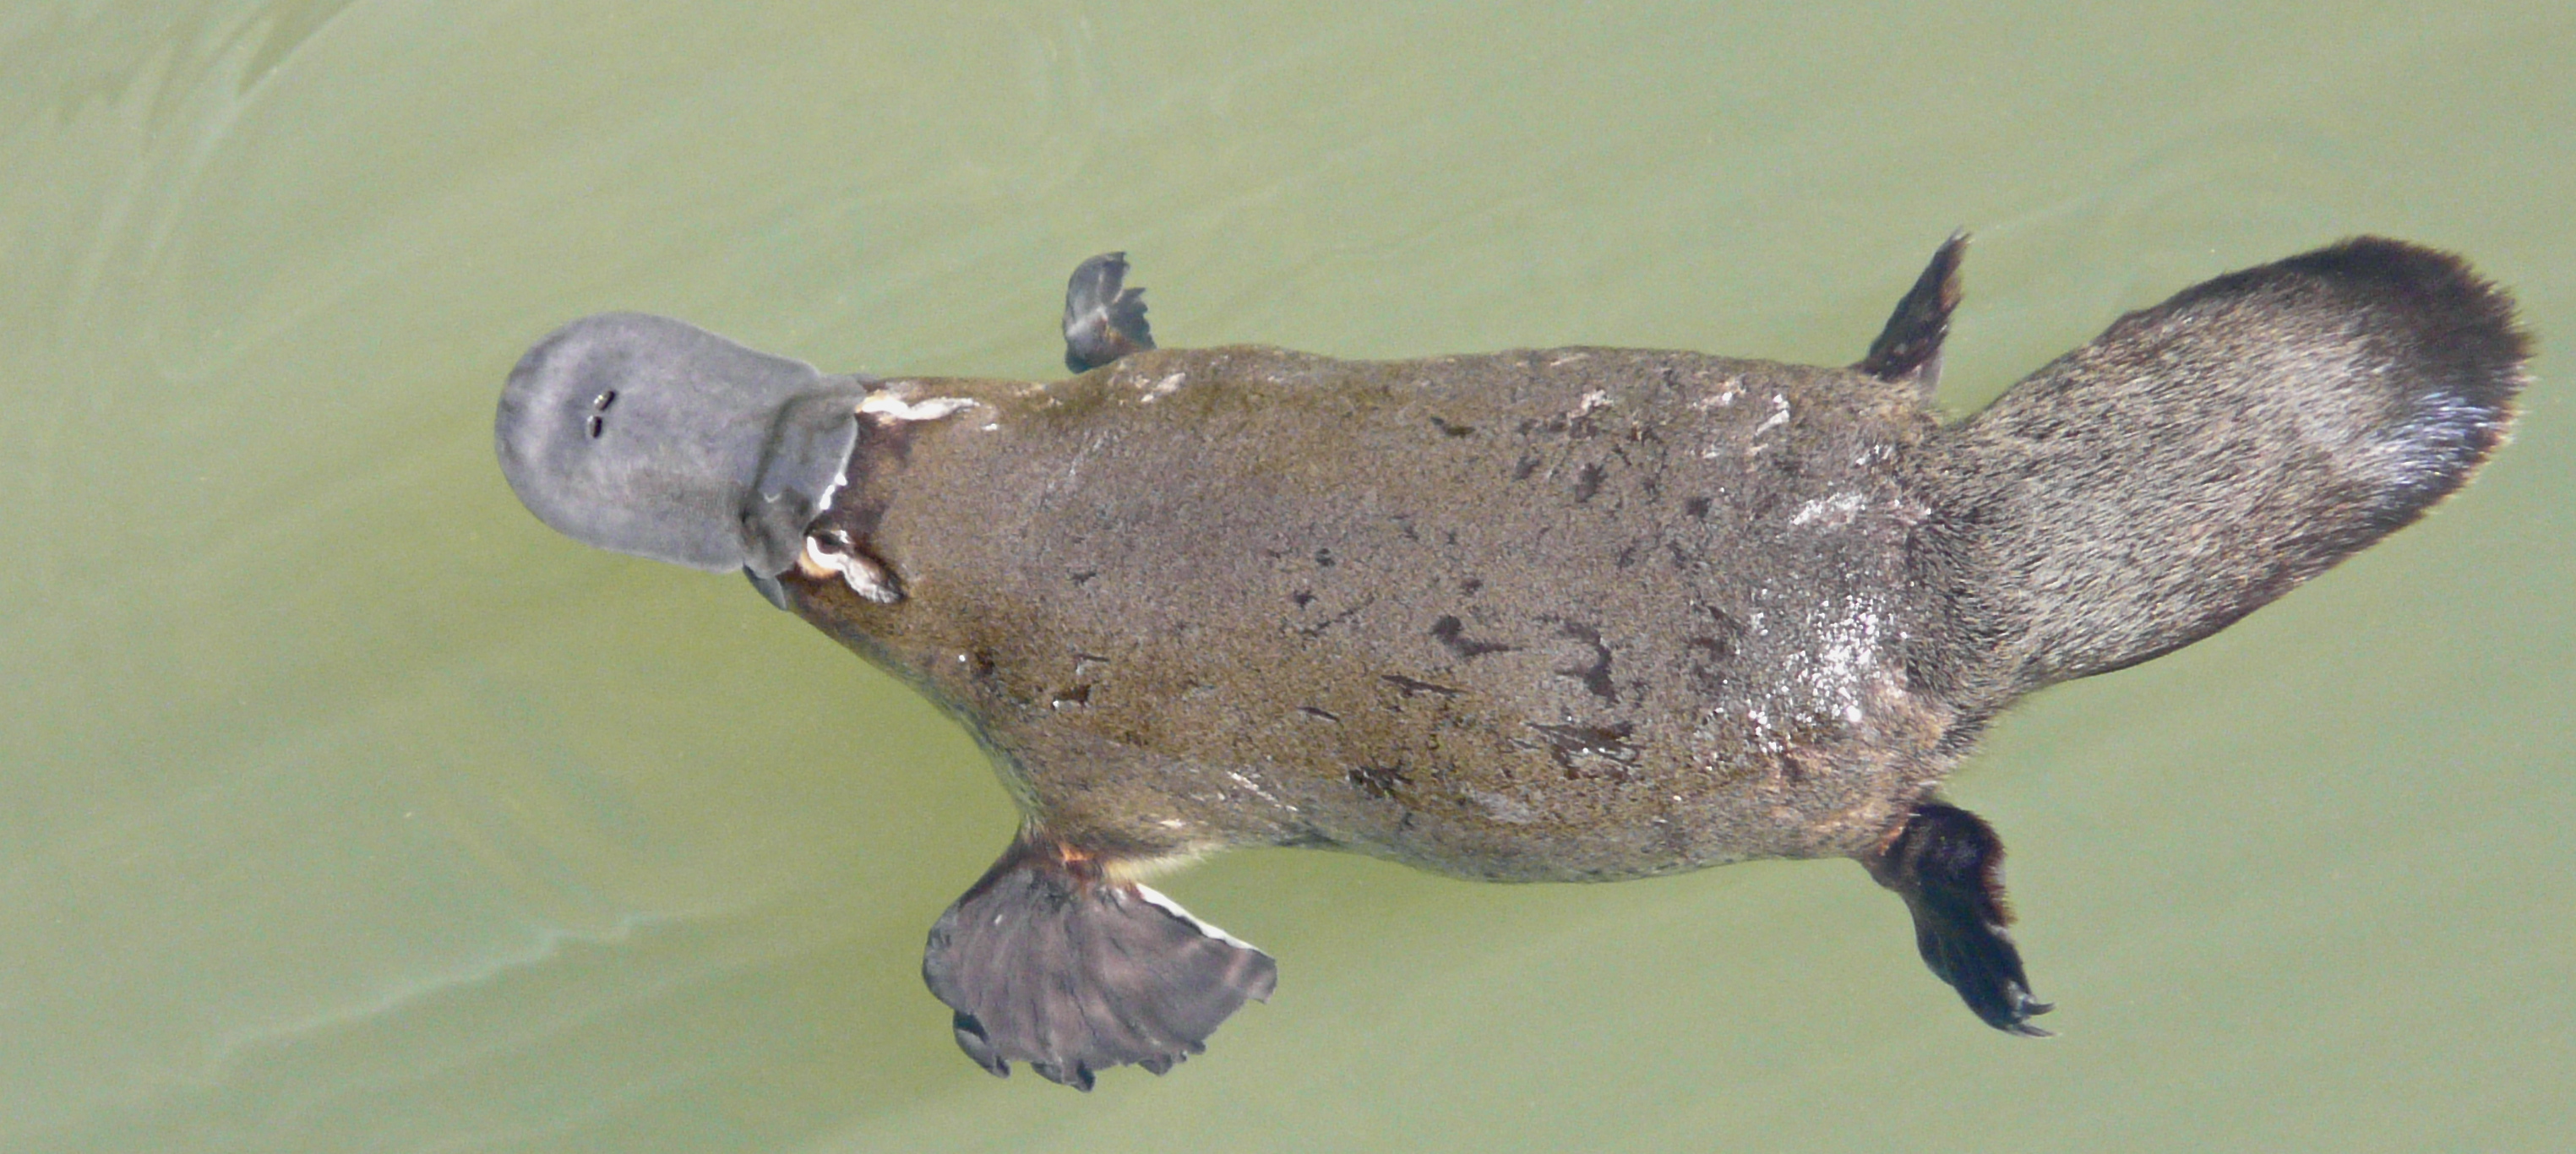 platypus in water